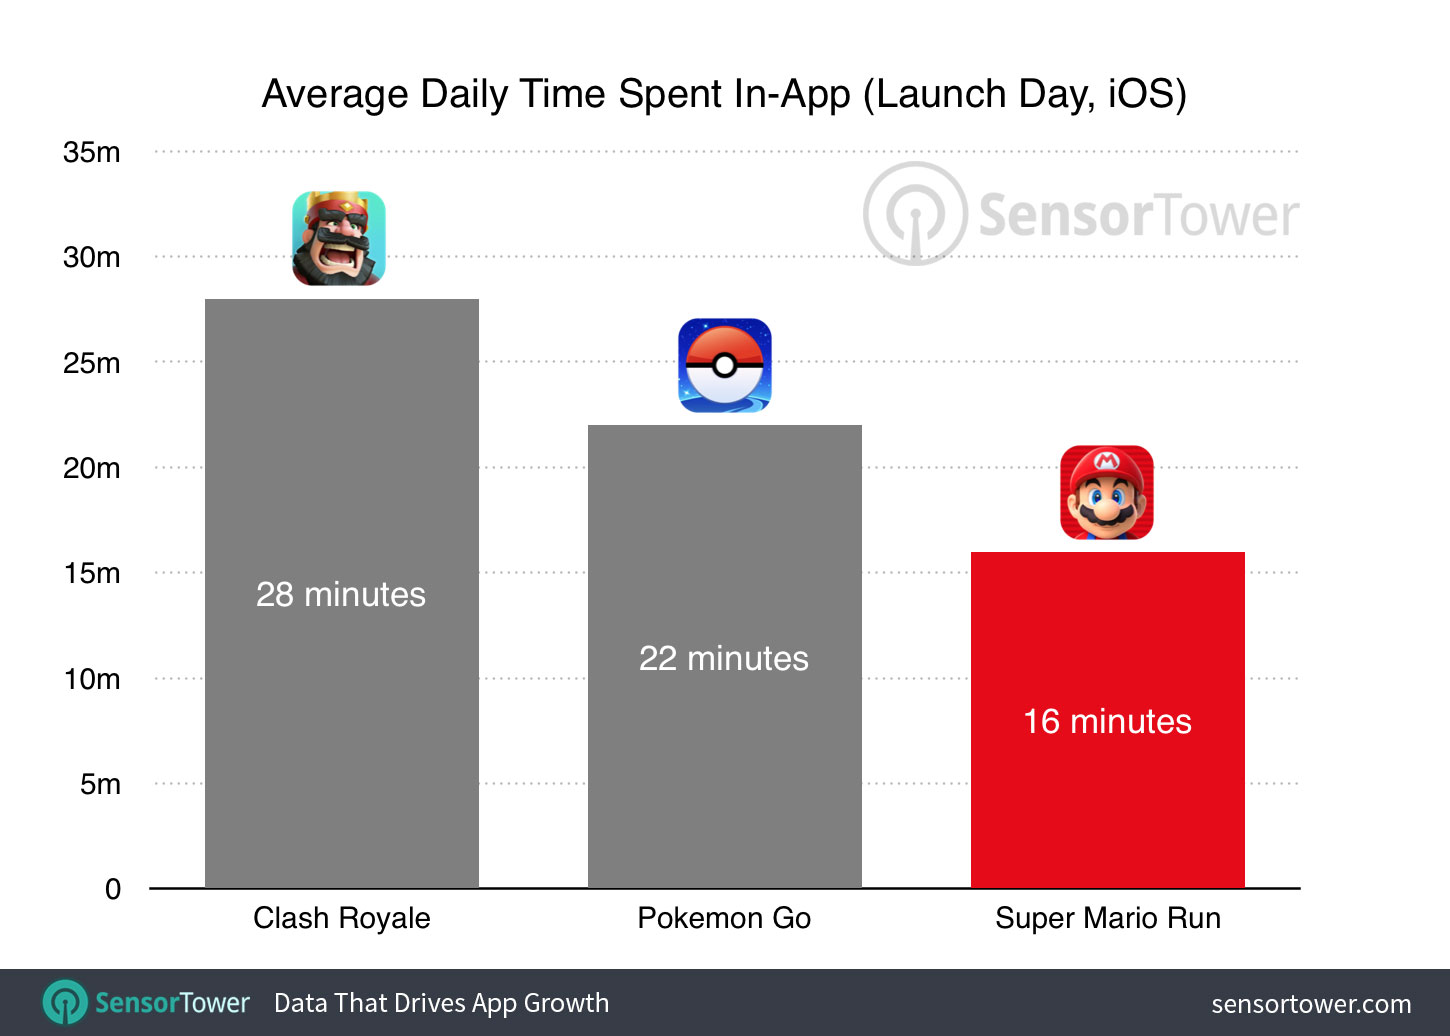 Super Mario Run First Day Usage Performance